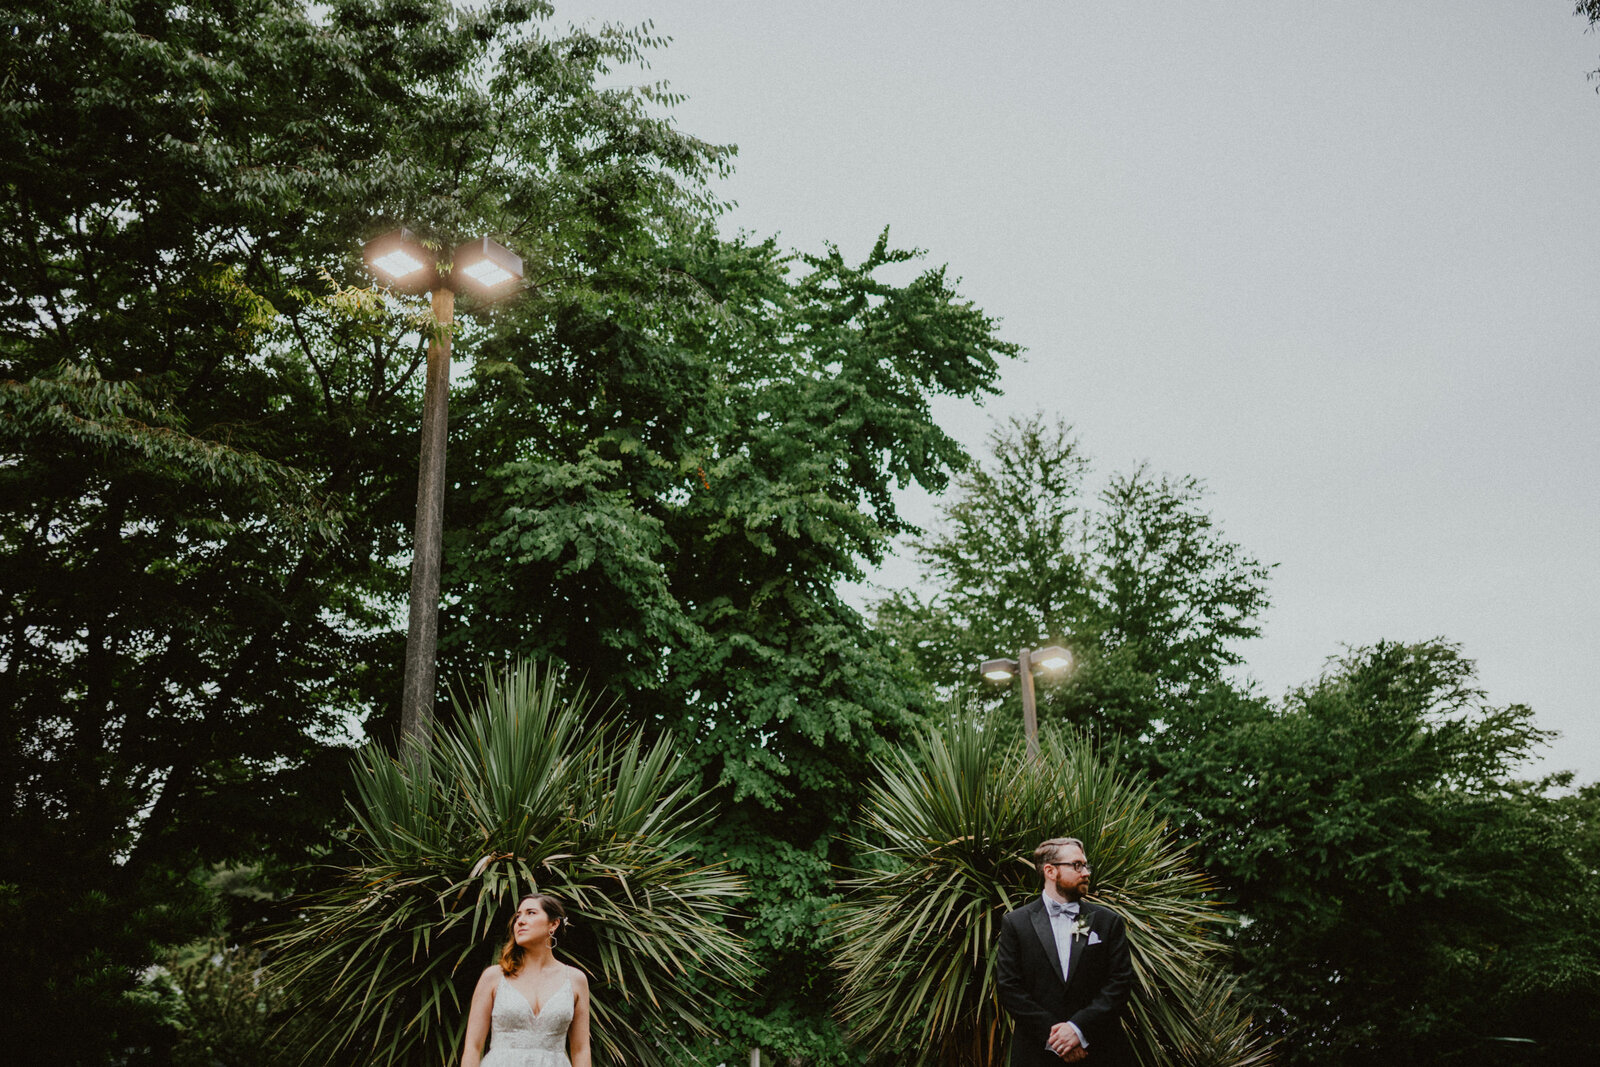 uw-arboretum-wisteria-hall-wedding-seattle-washington-chelsea-abril-photography-21